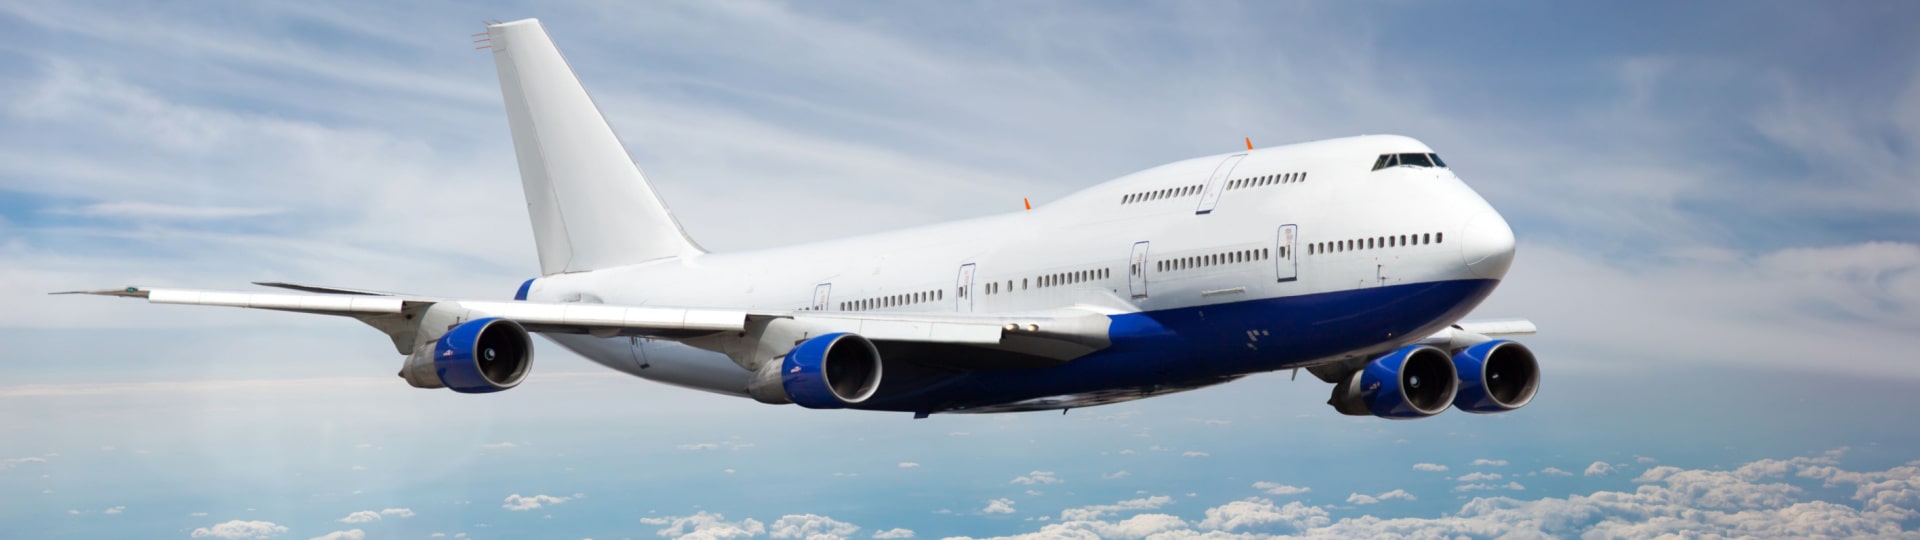 Boeing vyrobil poslední letadlo 747